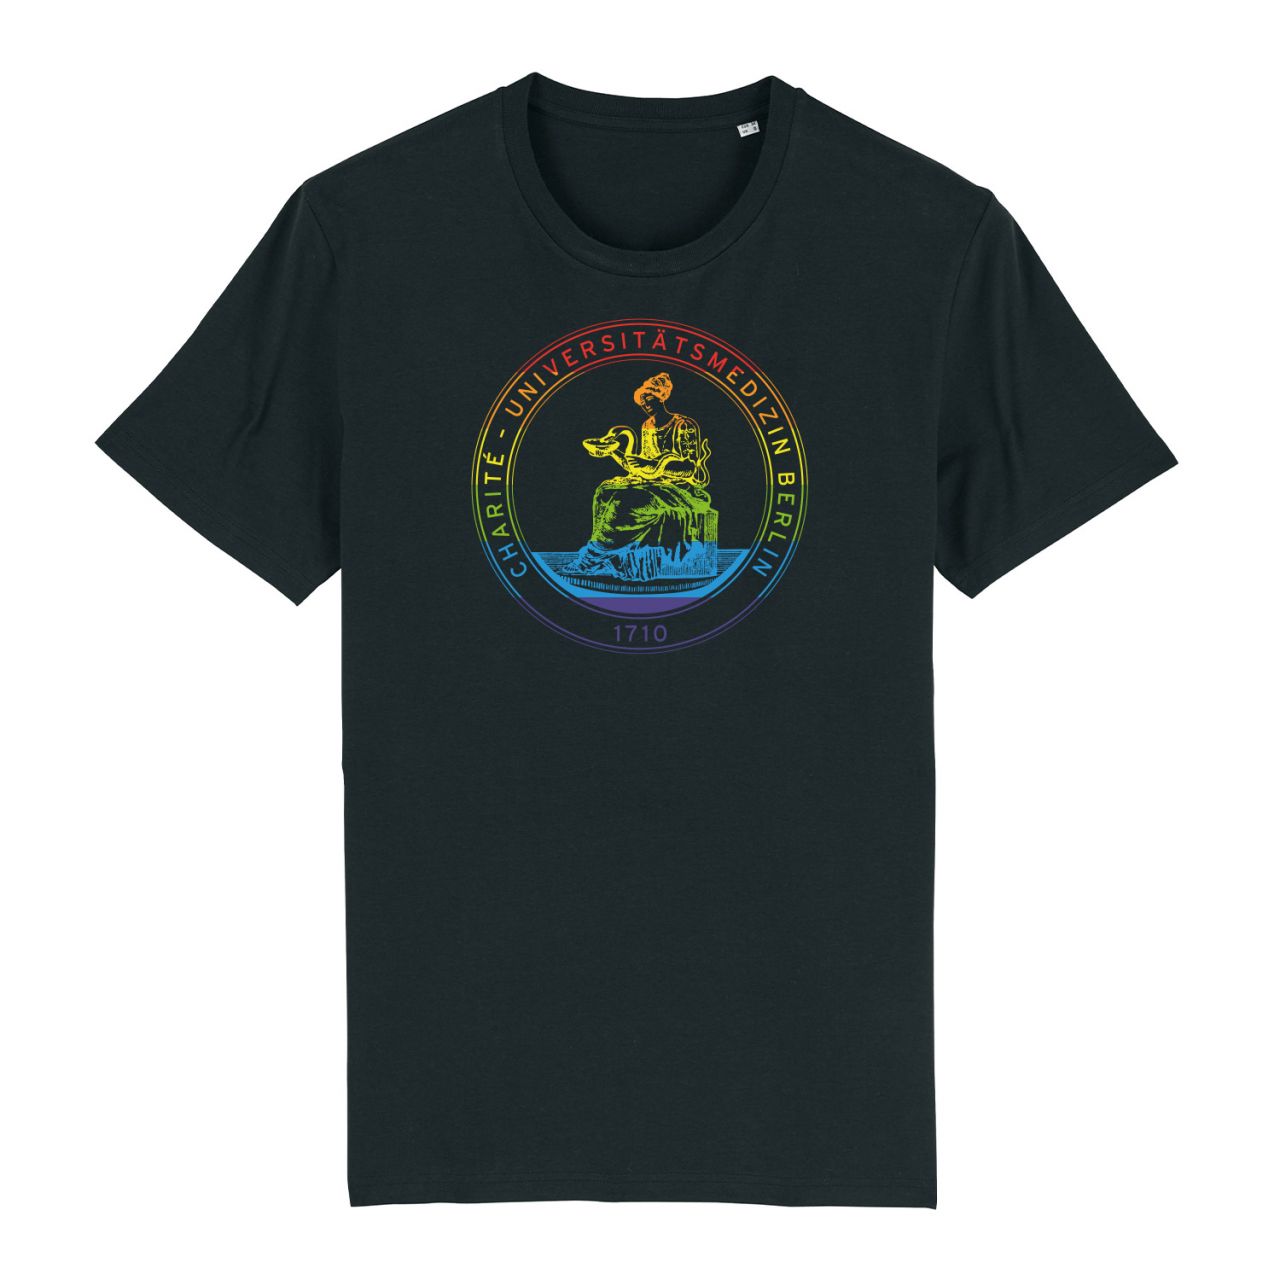 Unisex T-Shirt, black, Regenbogen